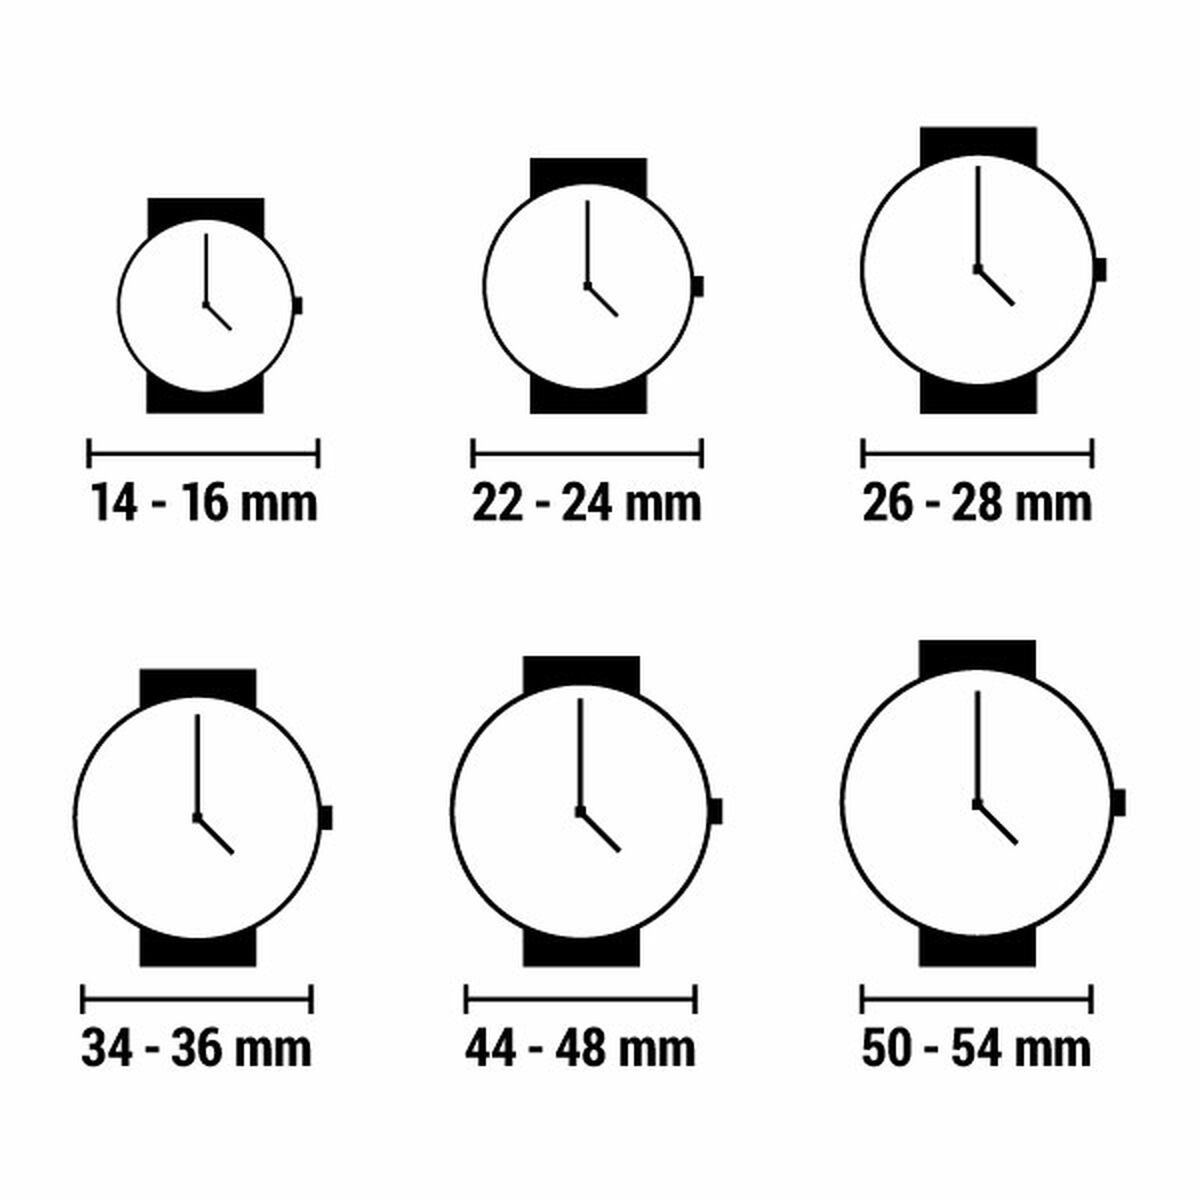 Horloge Dames Mark Maddox MM0101-55 (Ø 31 mm)